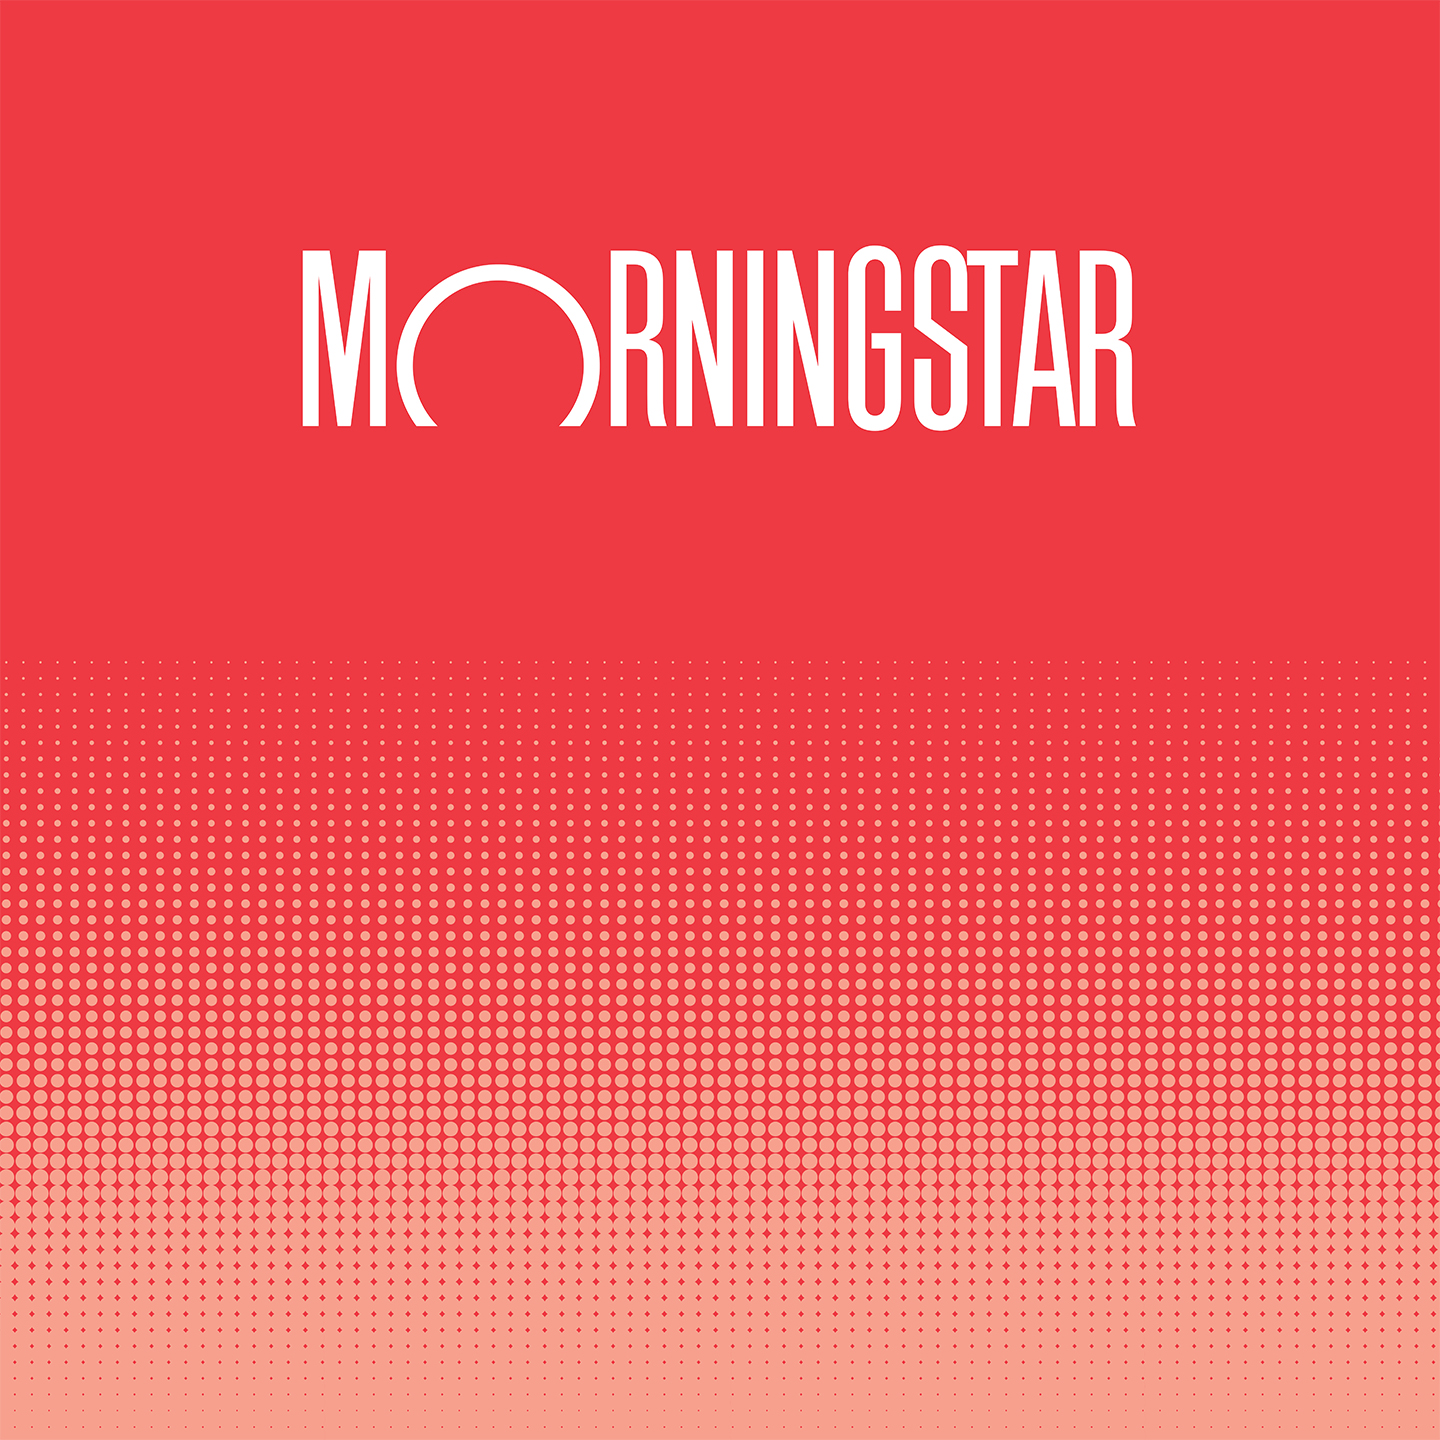 Morningstar UK